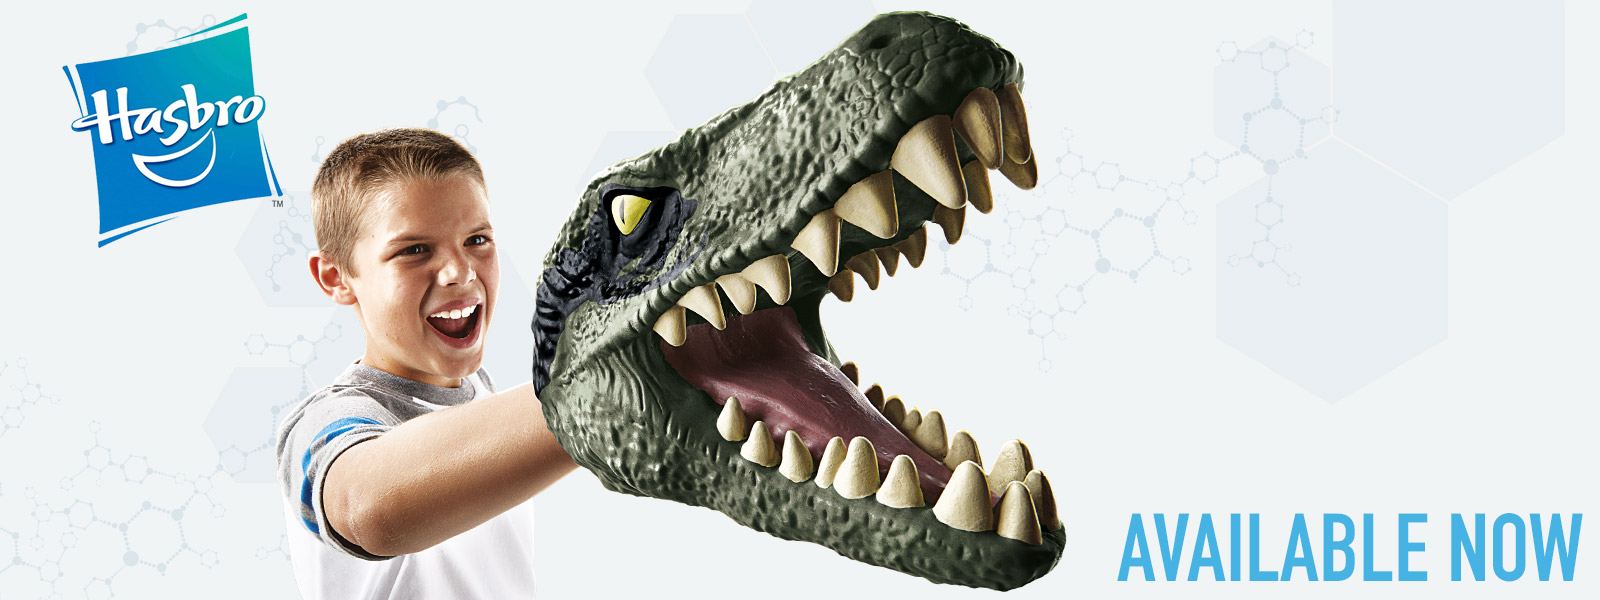 Hasbro Dino Head Puppet: Available Now